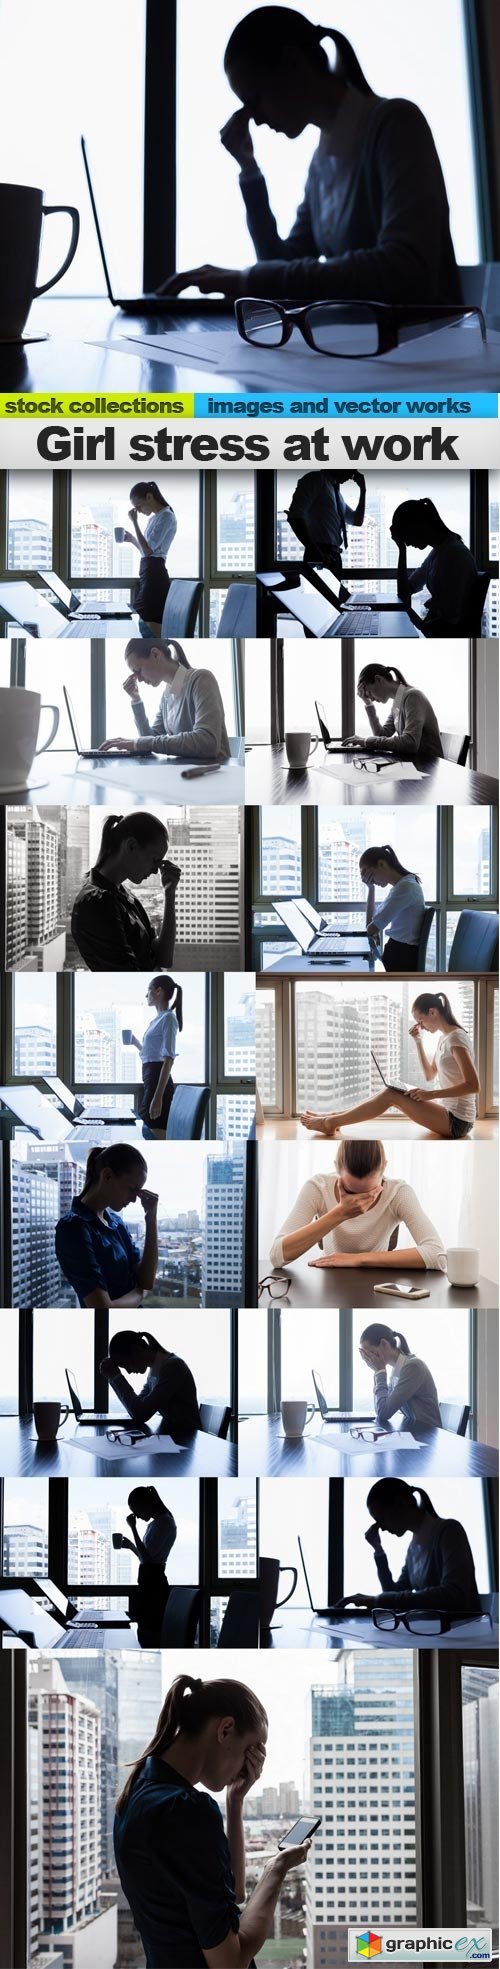 Girl stress at work, 15 x UHQ JPEG